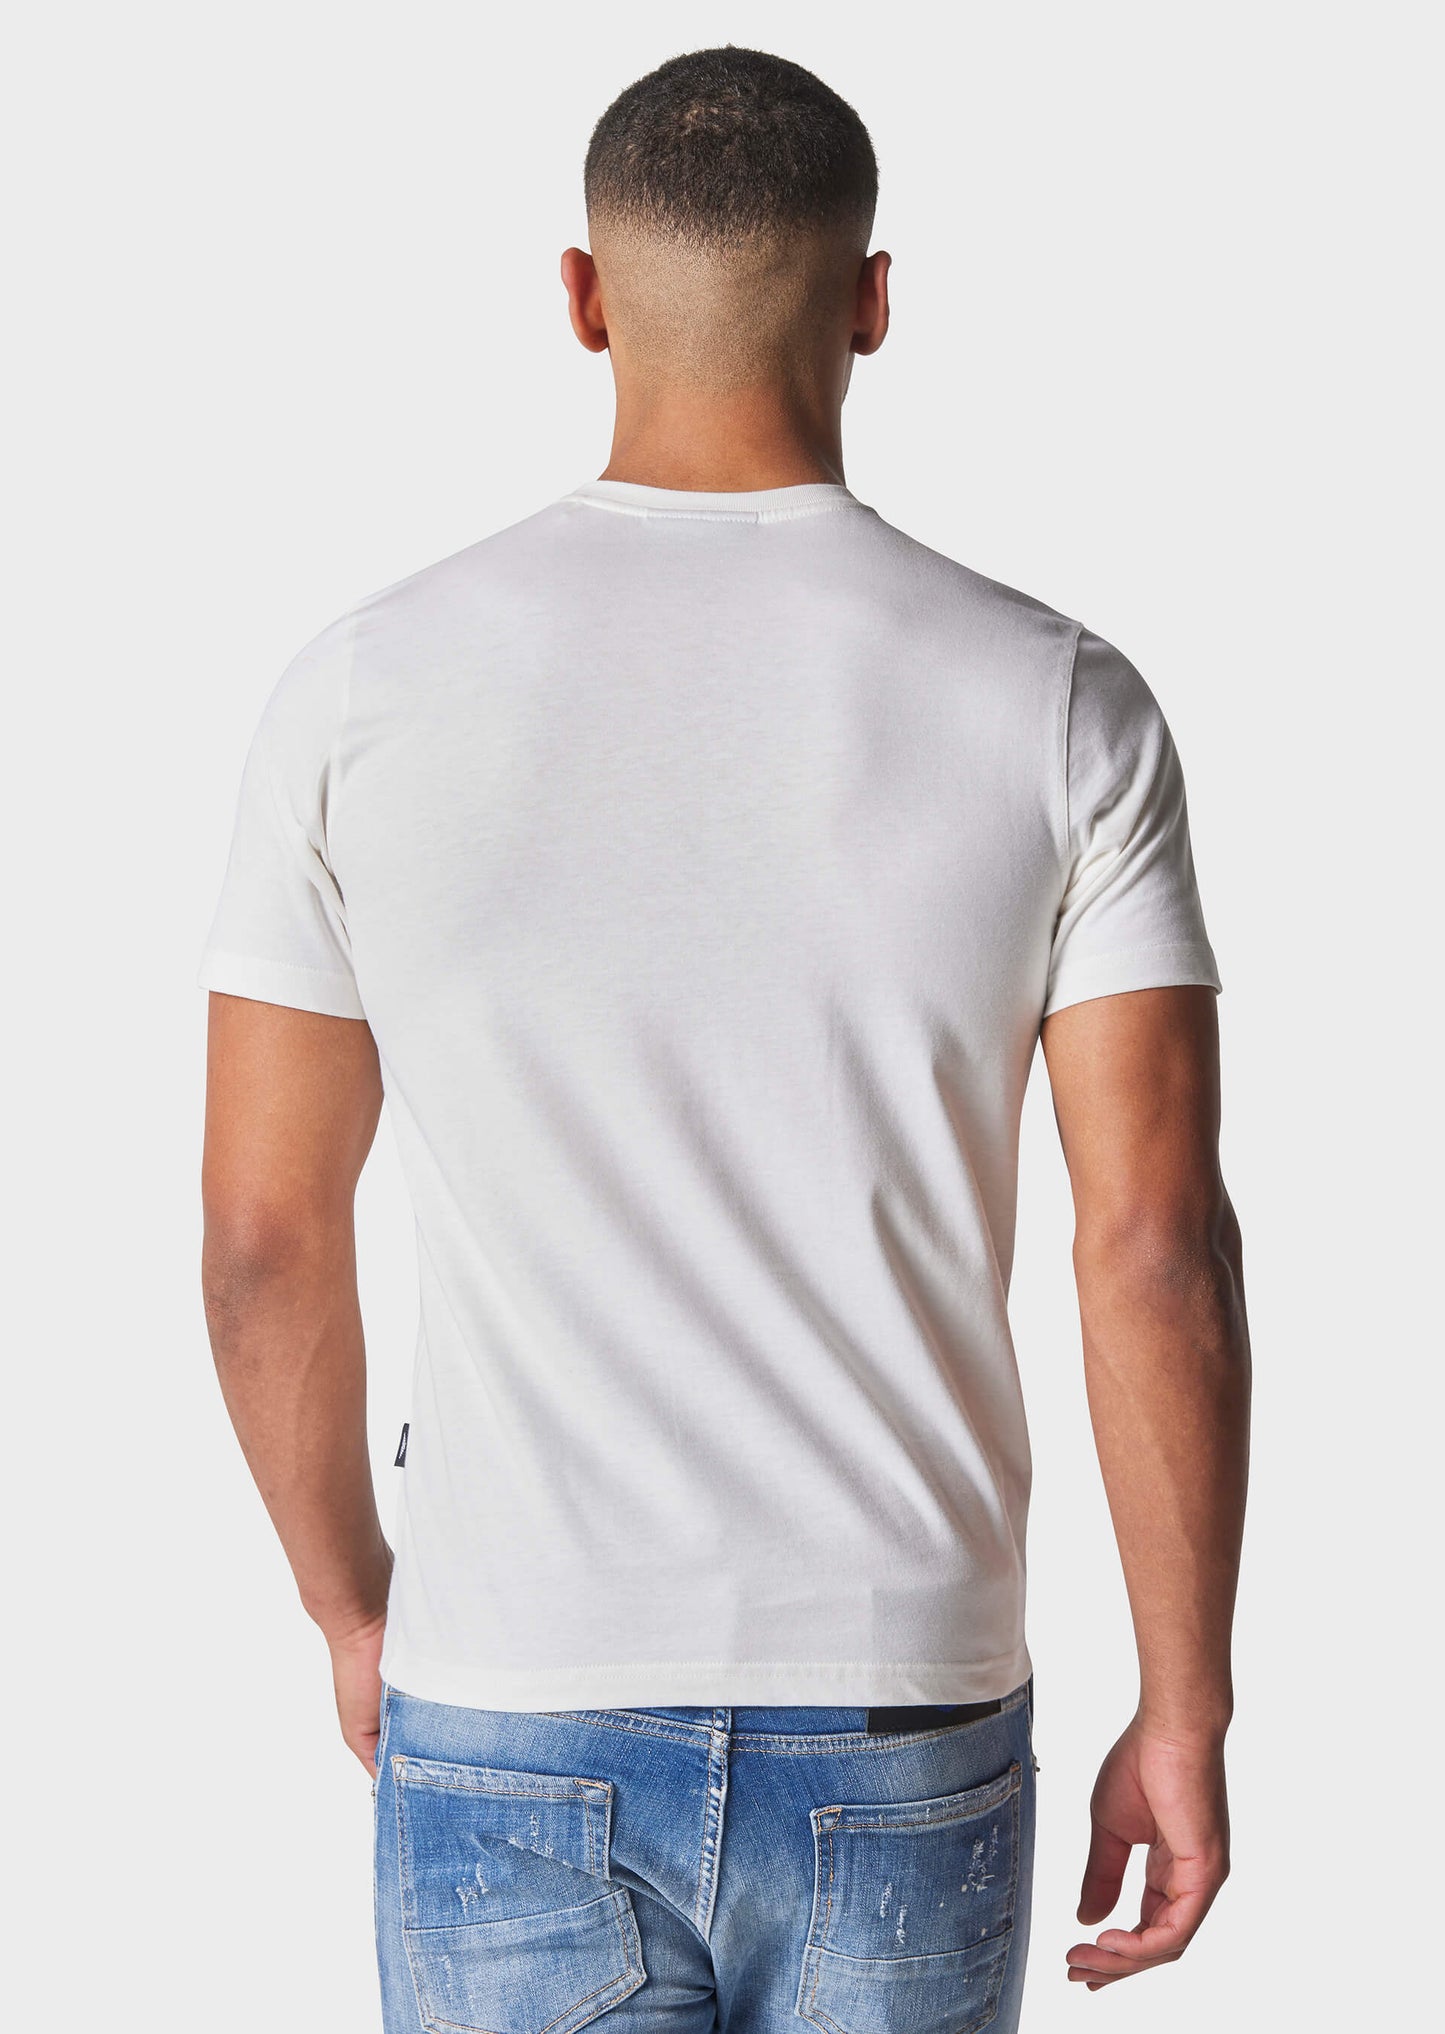 Anes Bone White T-Shirt